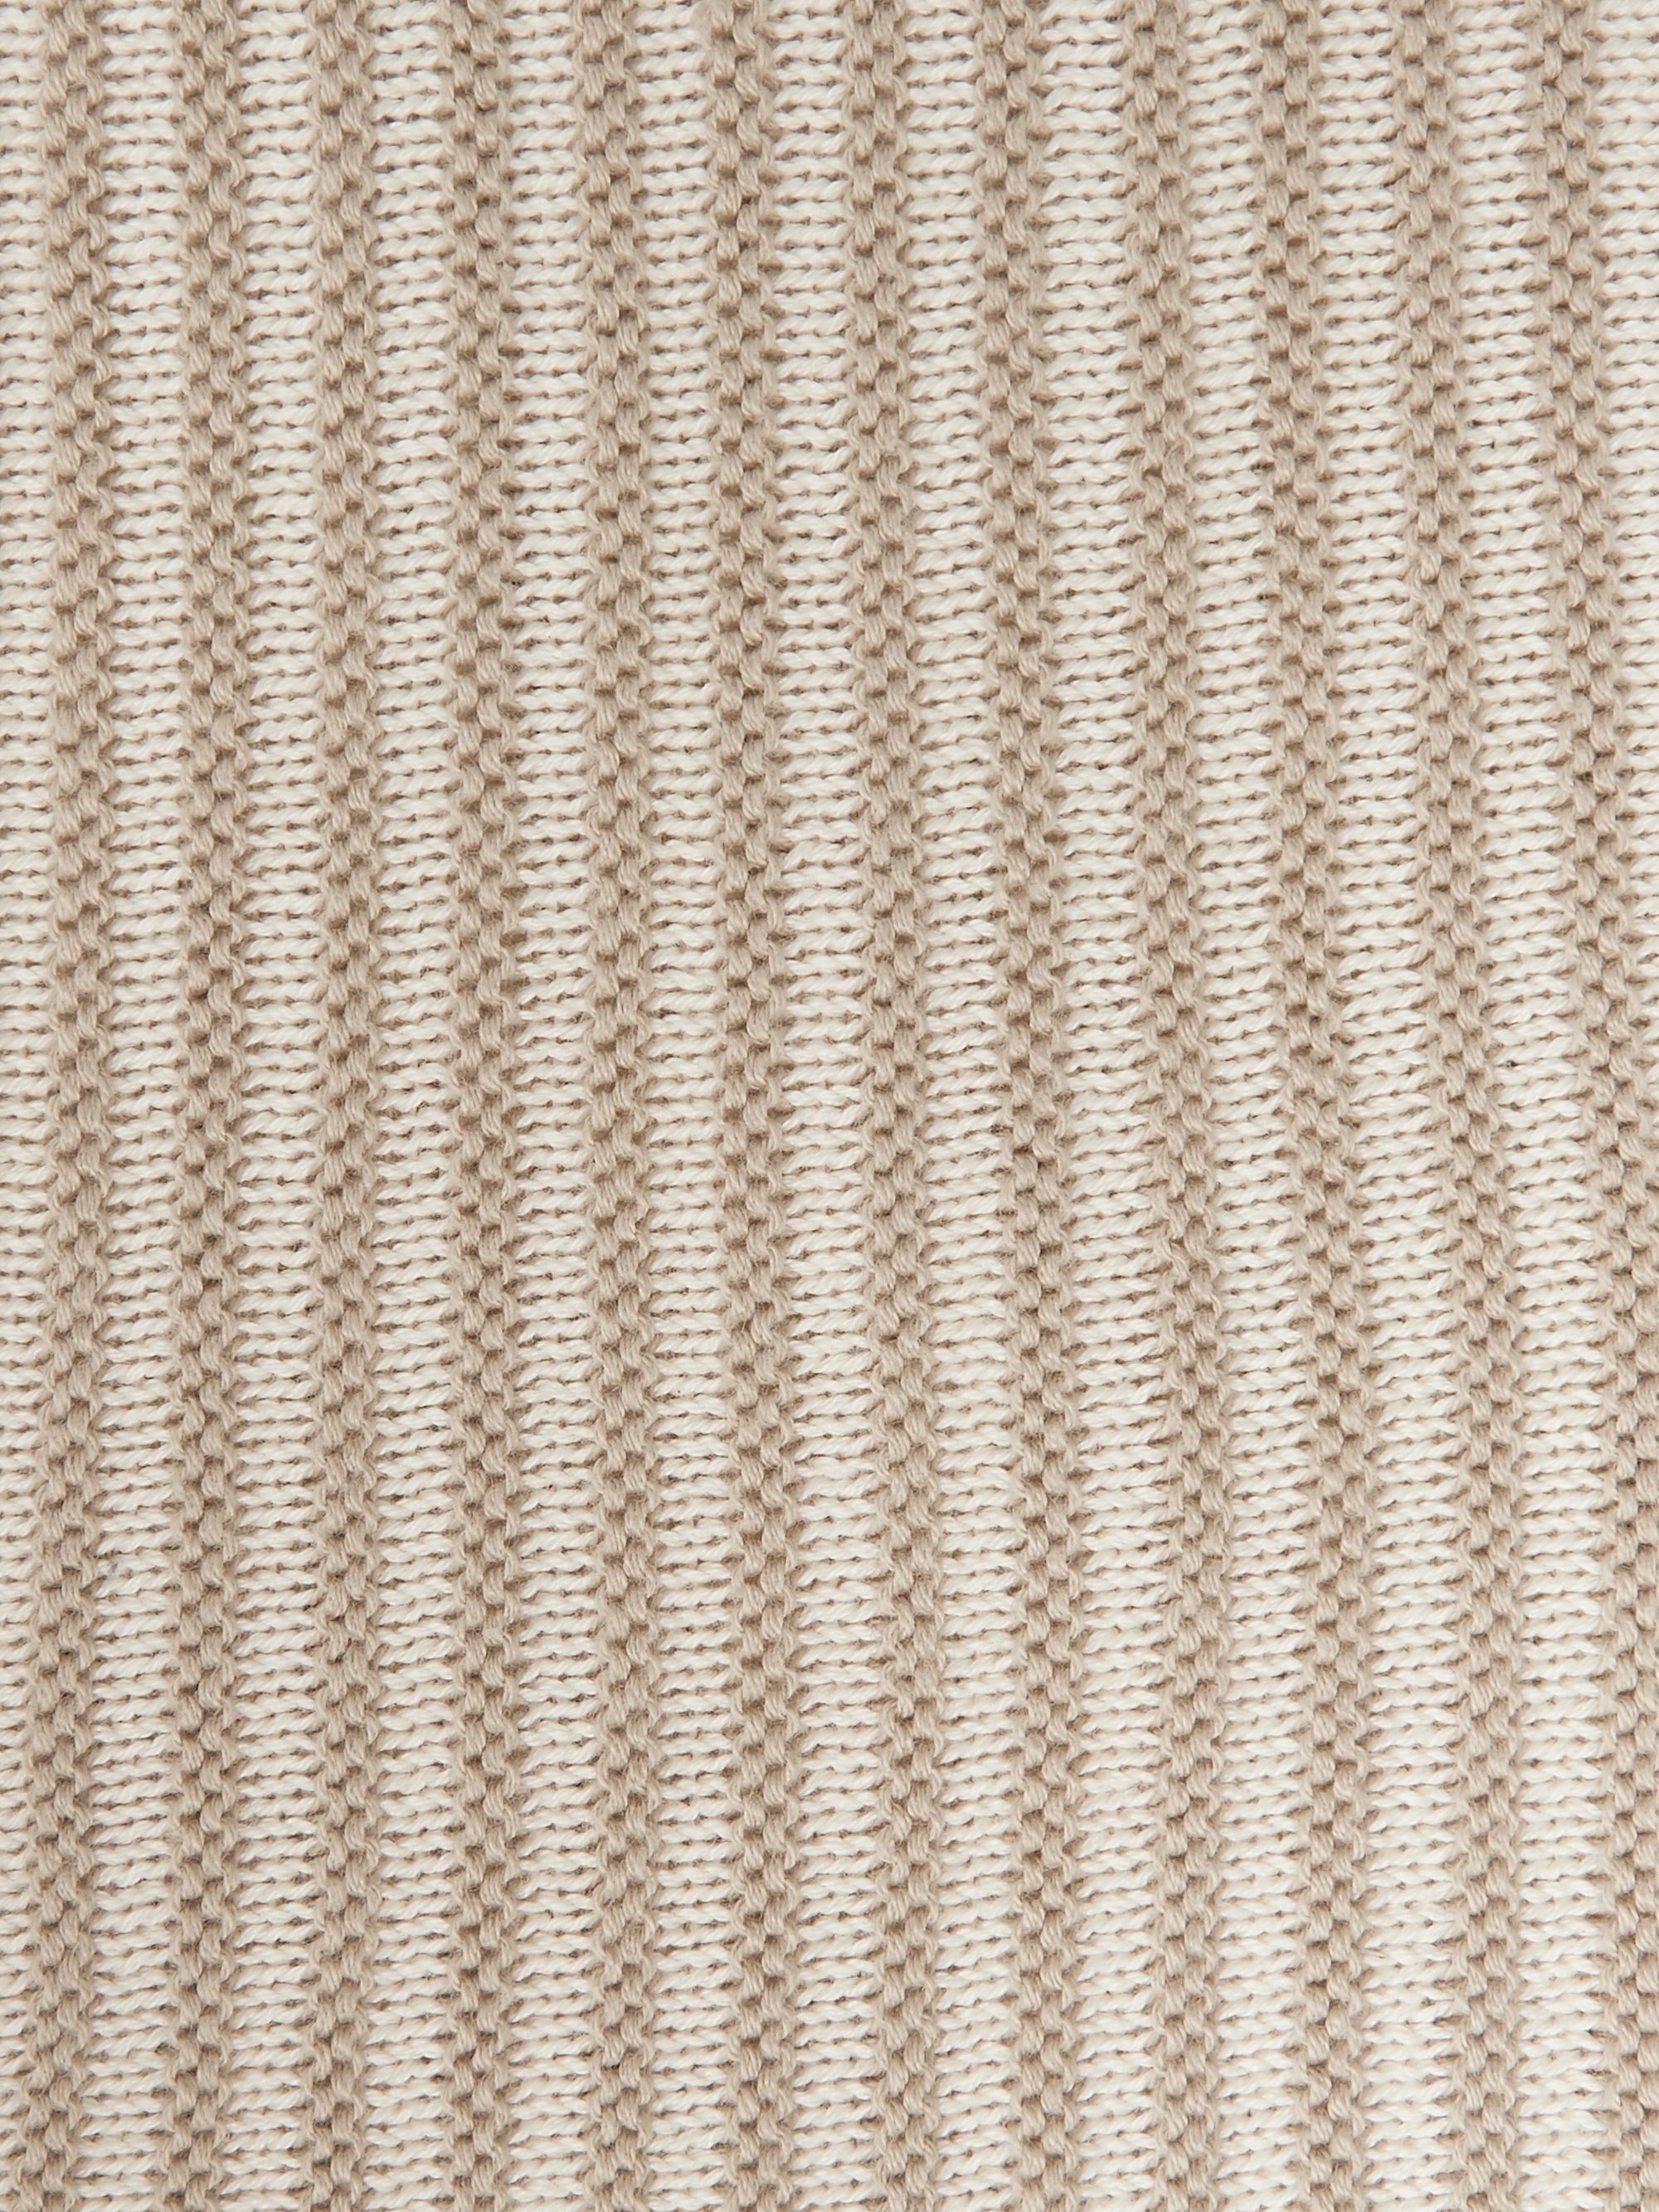 Beige Warehouse Striped Cotton Blanket Soho Home Mr Porter